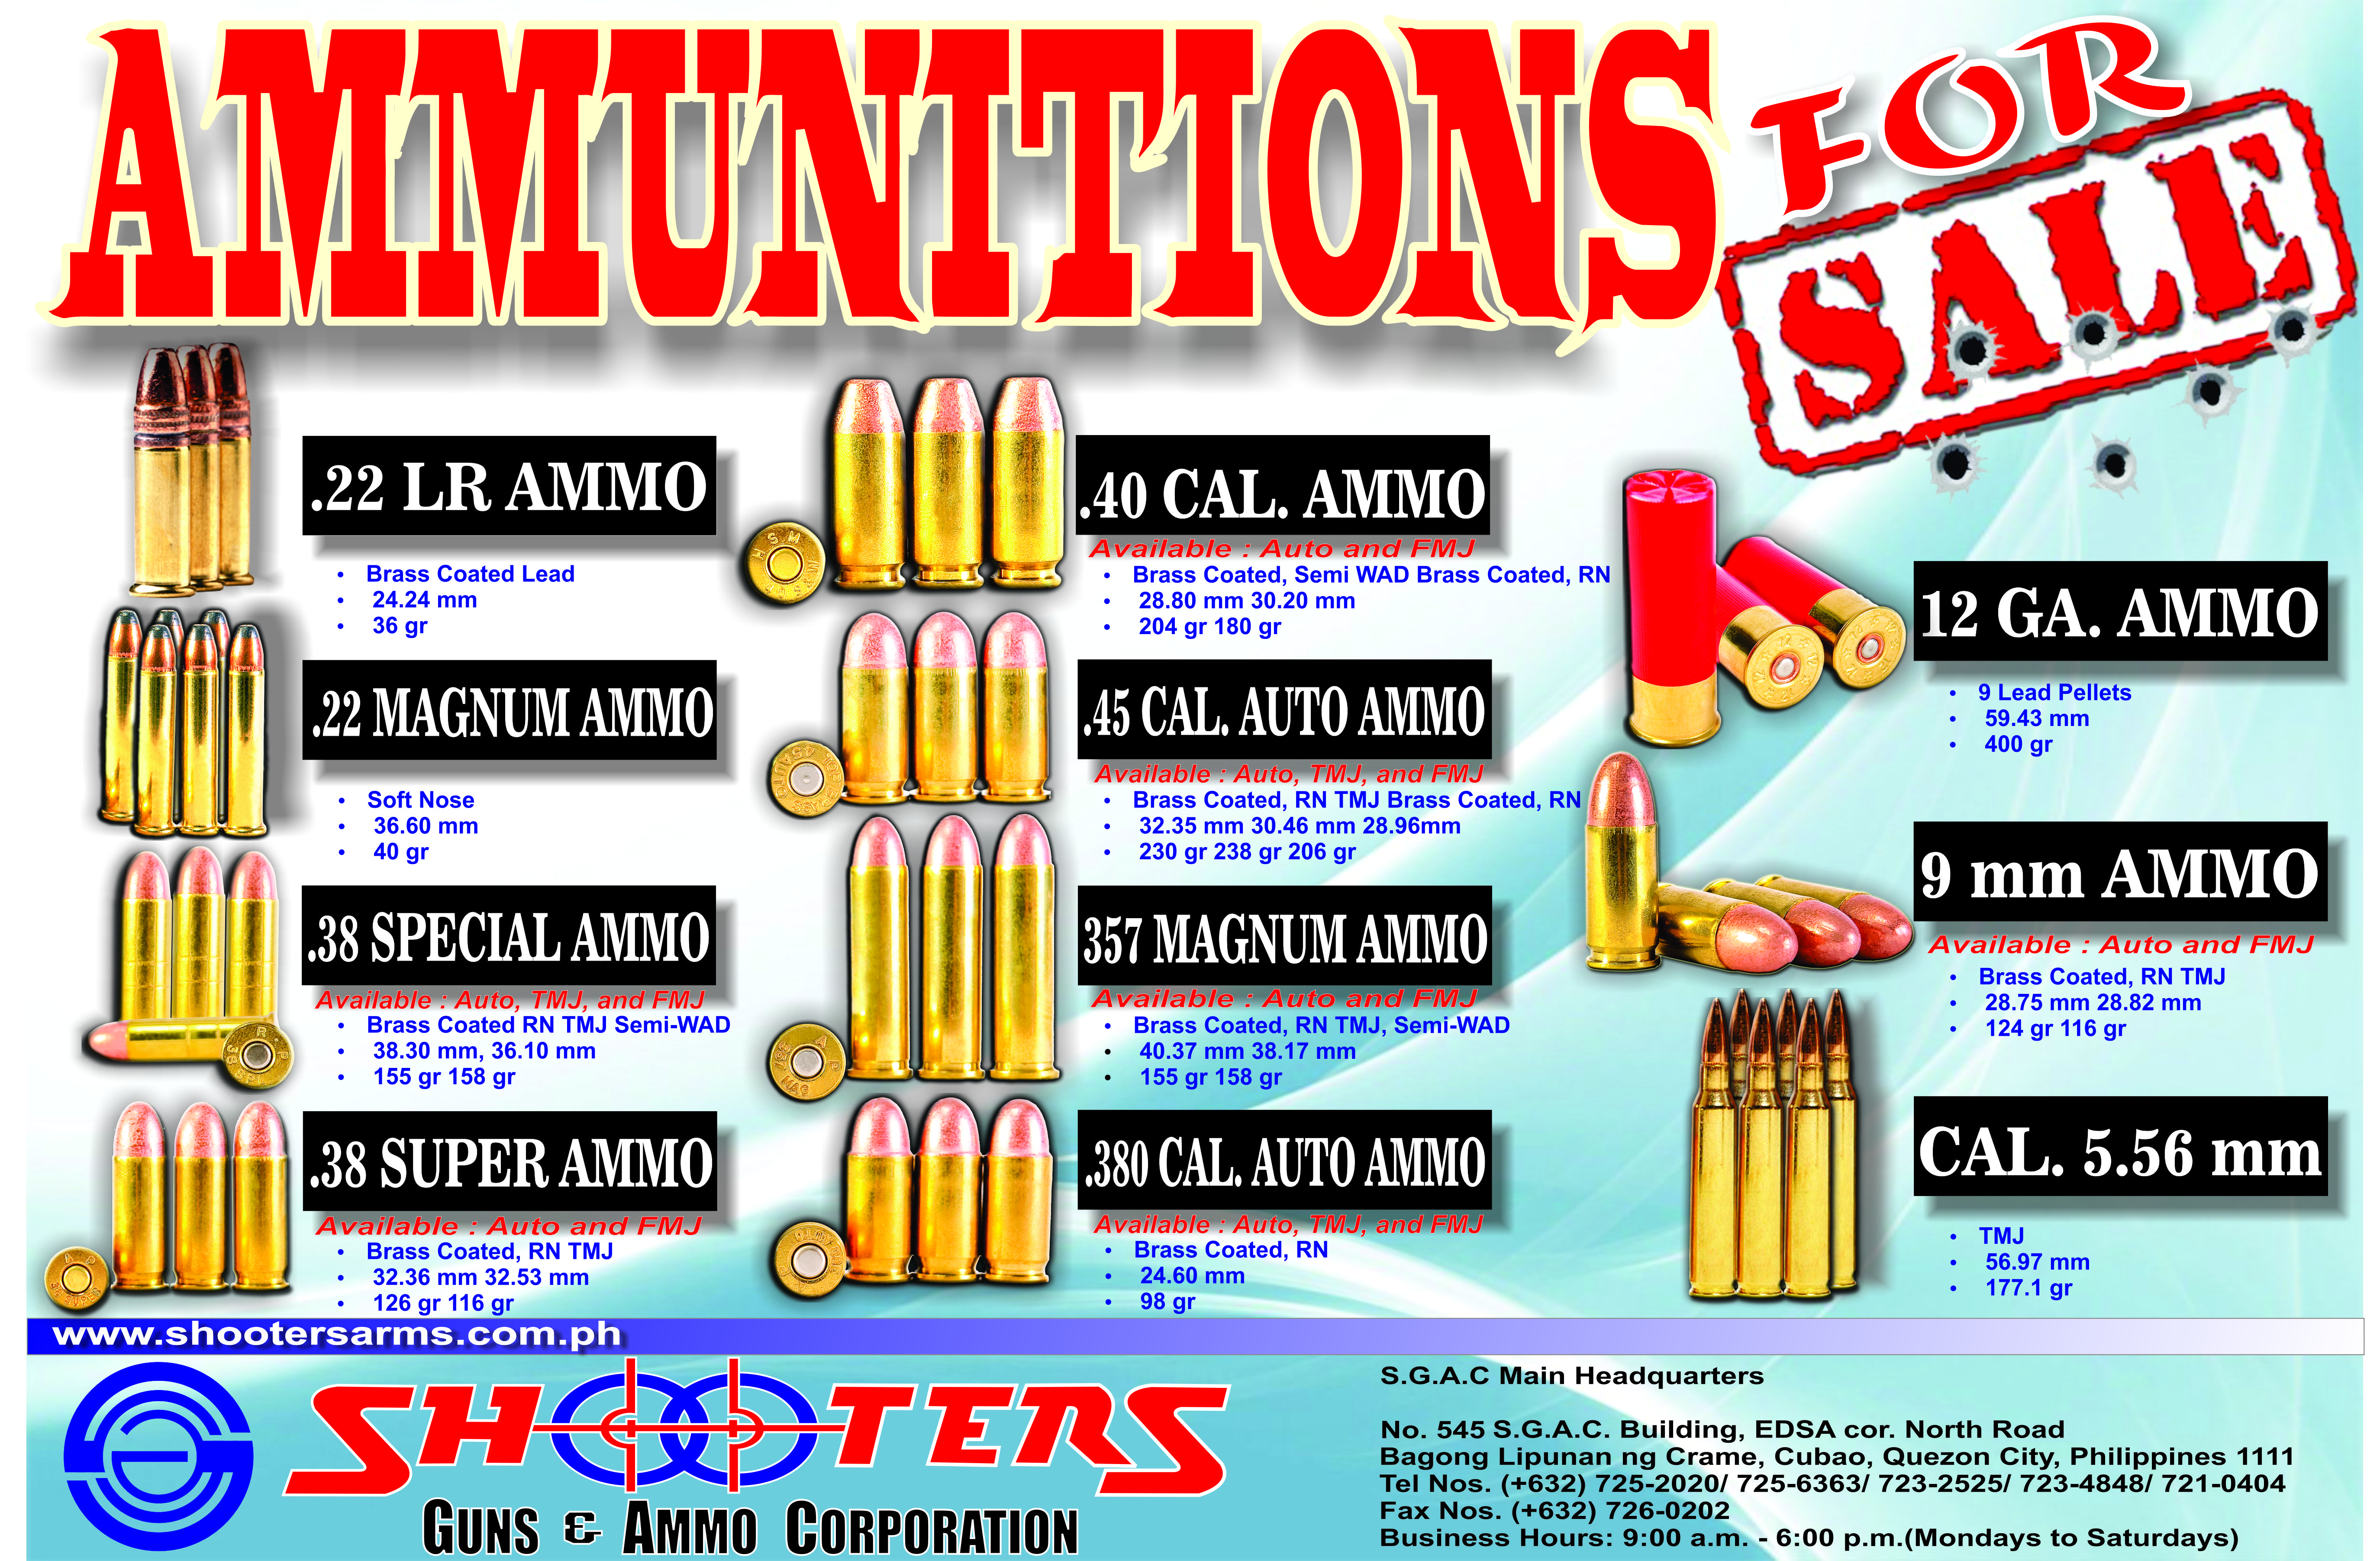 Ammunitions